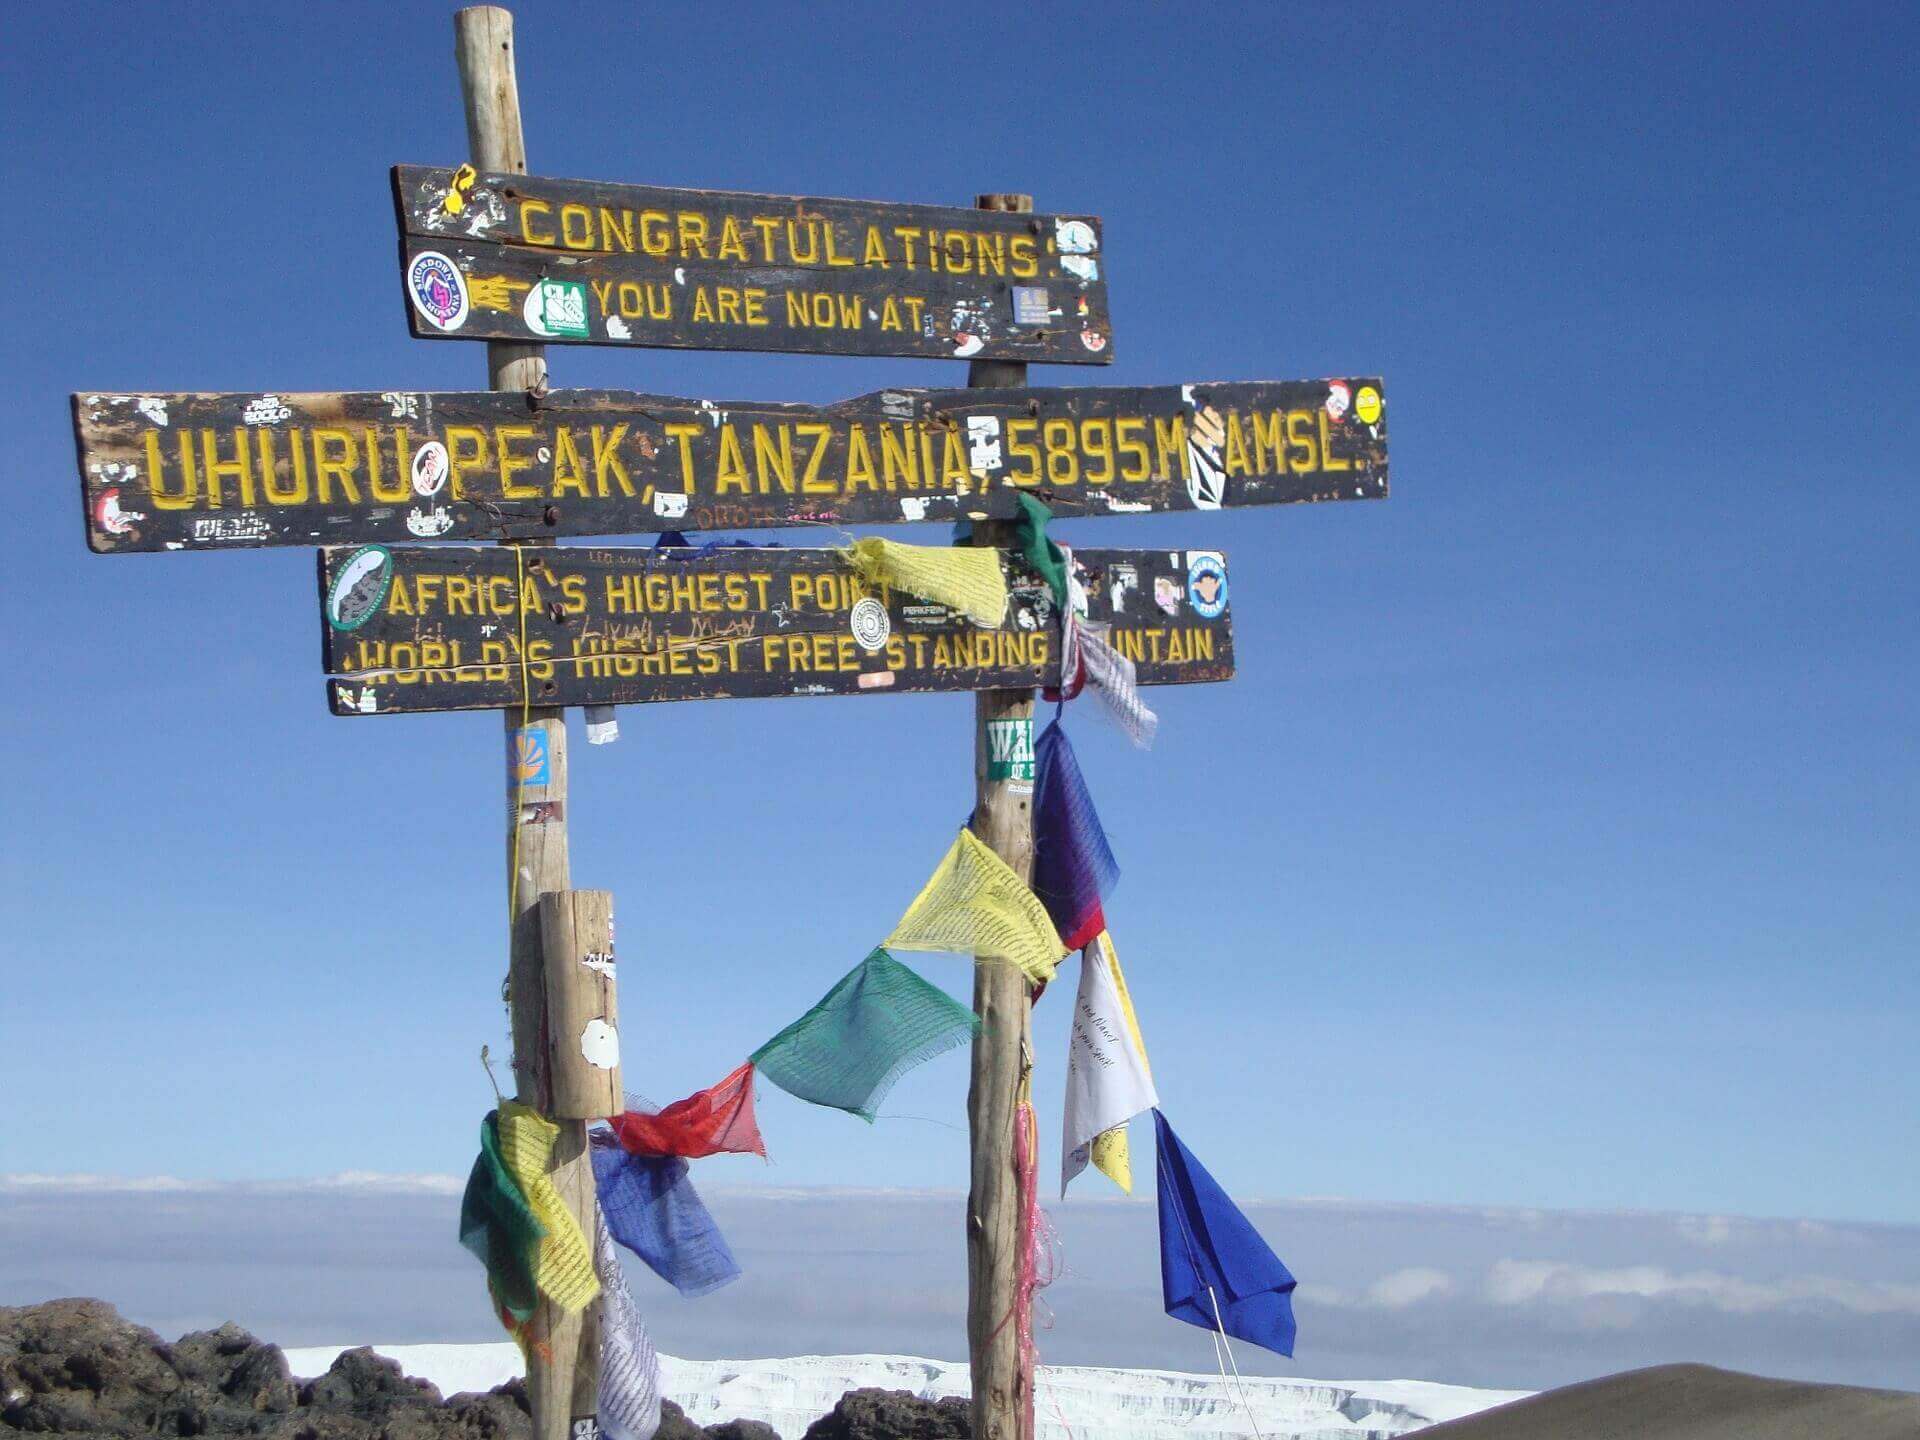 Uhuru Peak sign at the top of Mount Kilimanjaro